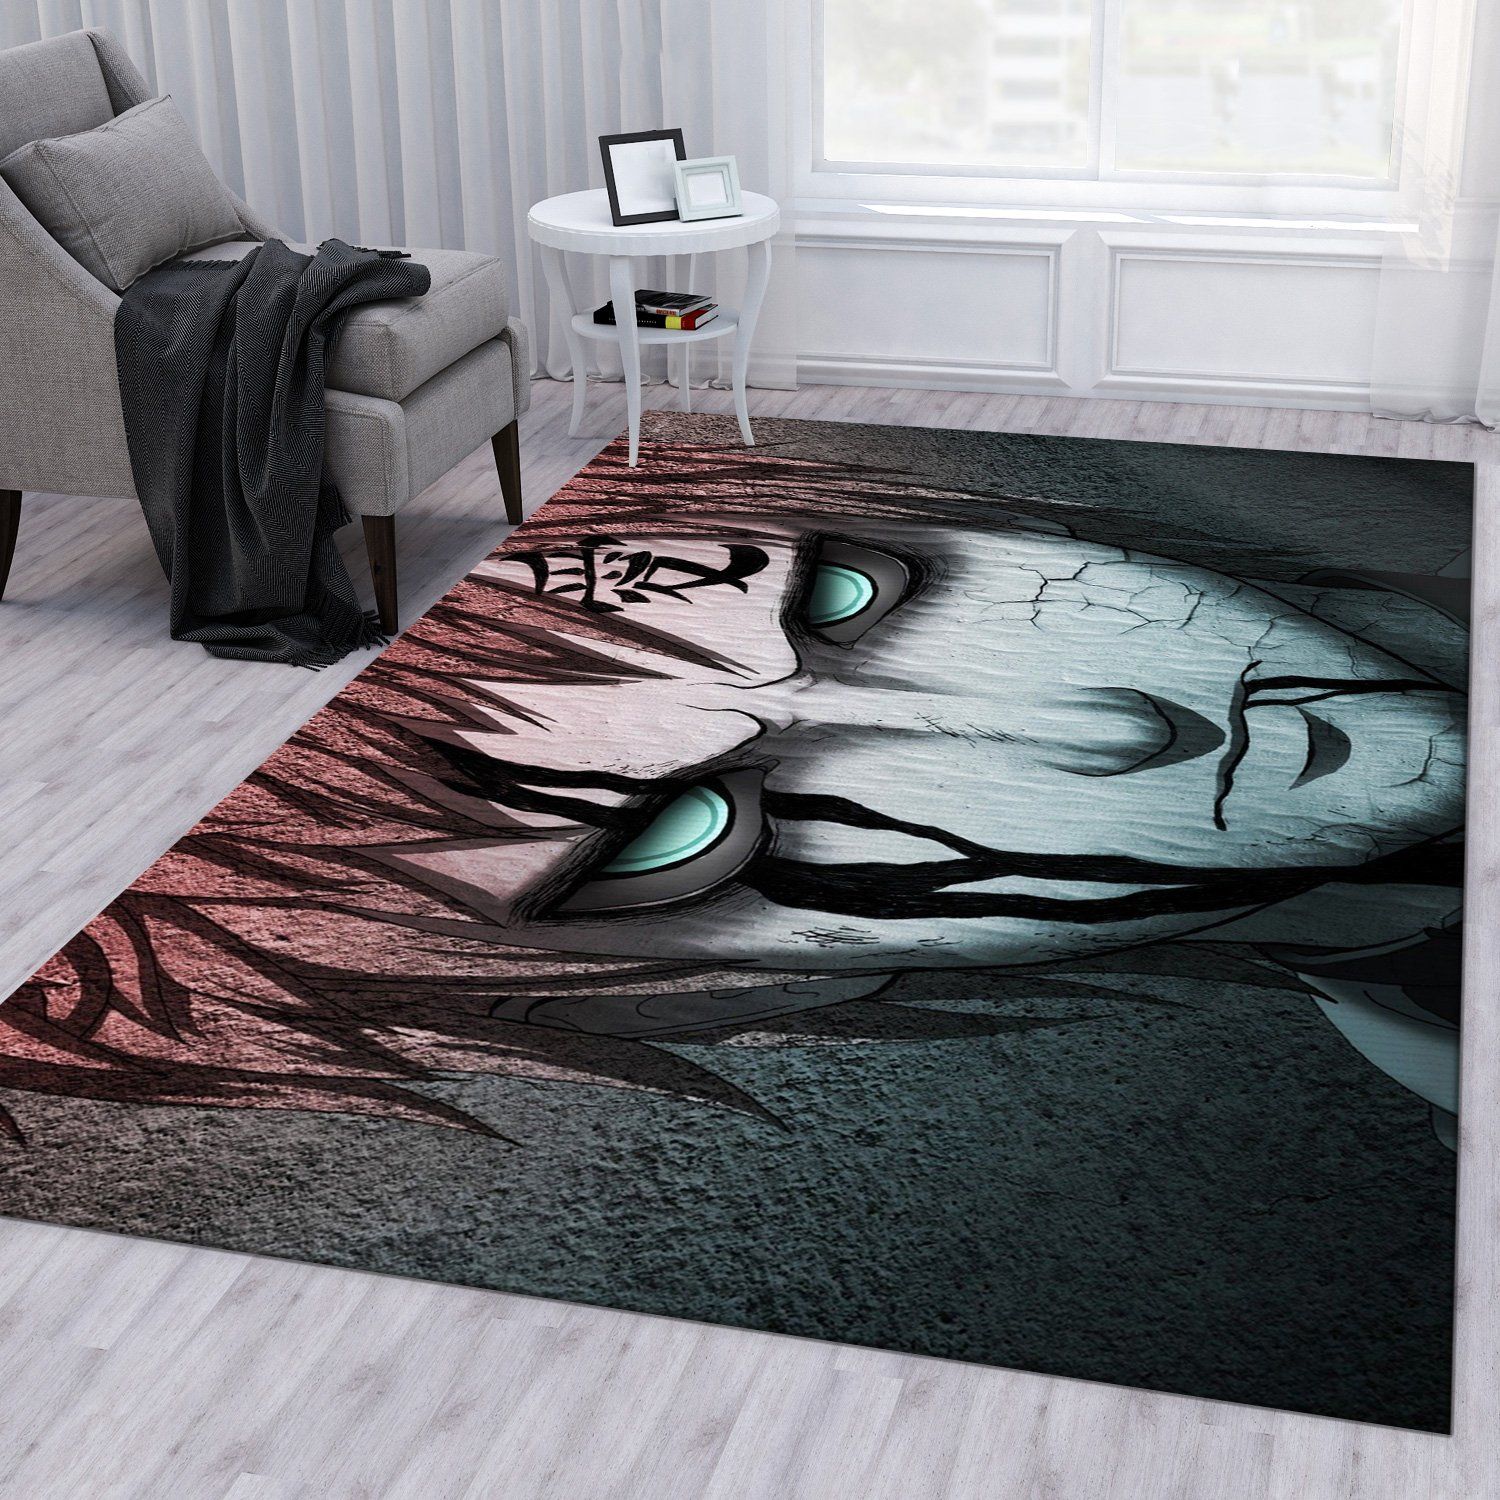 Hatake Kakashi Chidori Anime Area Rug  Carpet in 2023  Rugs on carpet  Colorful rugs Area rugs